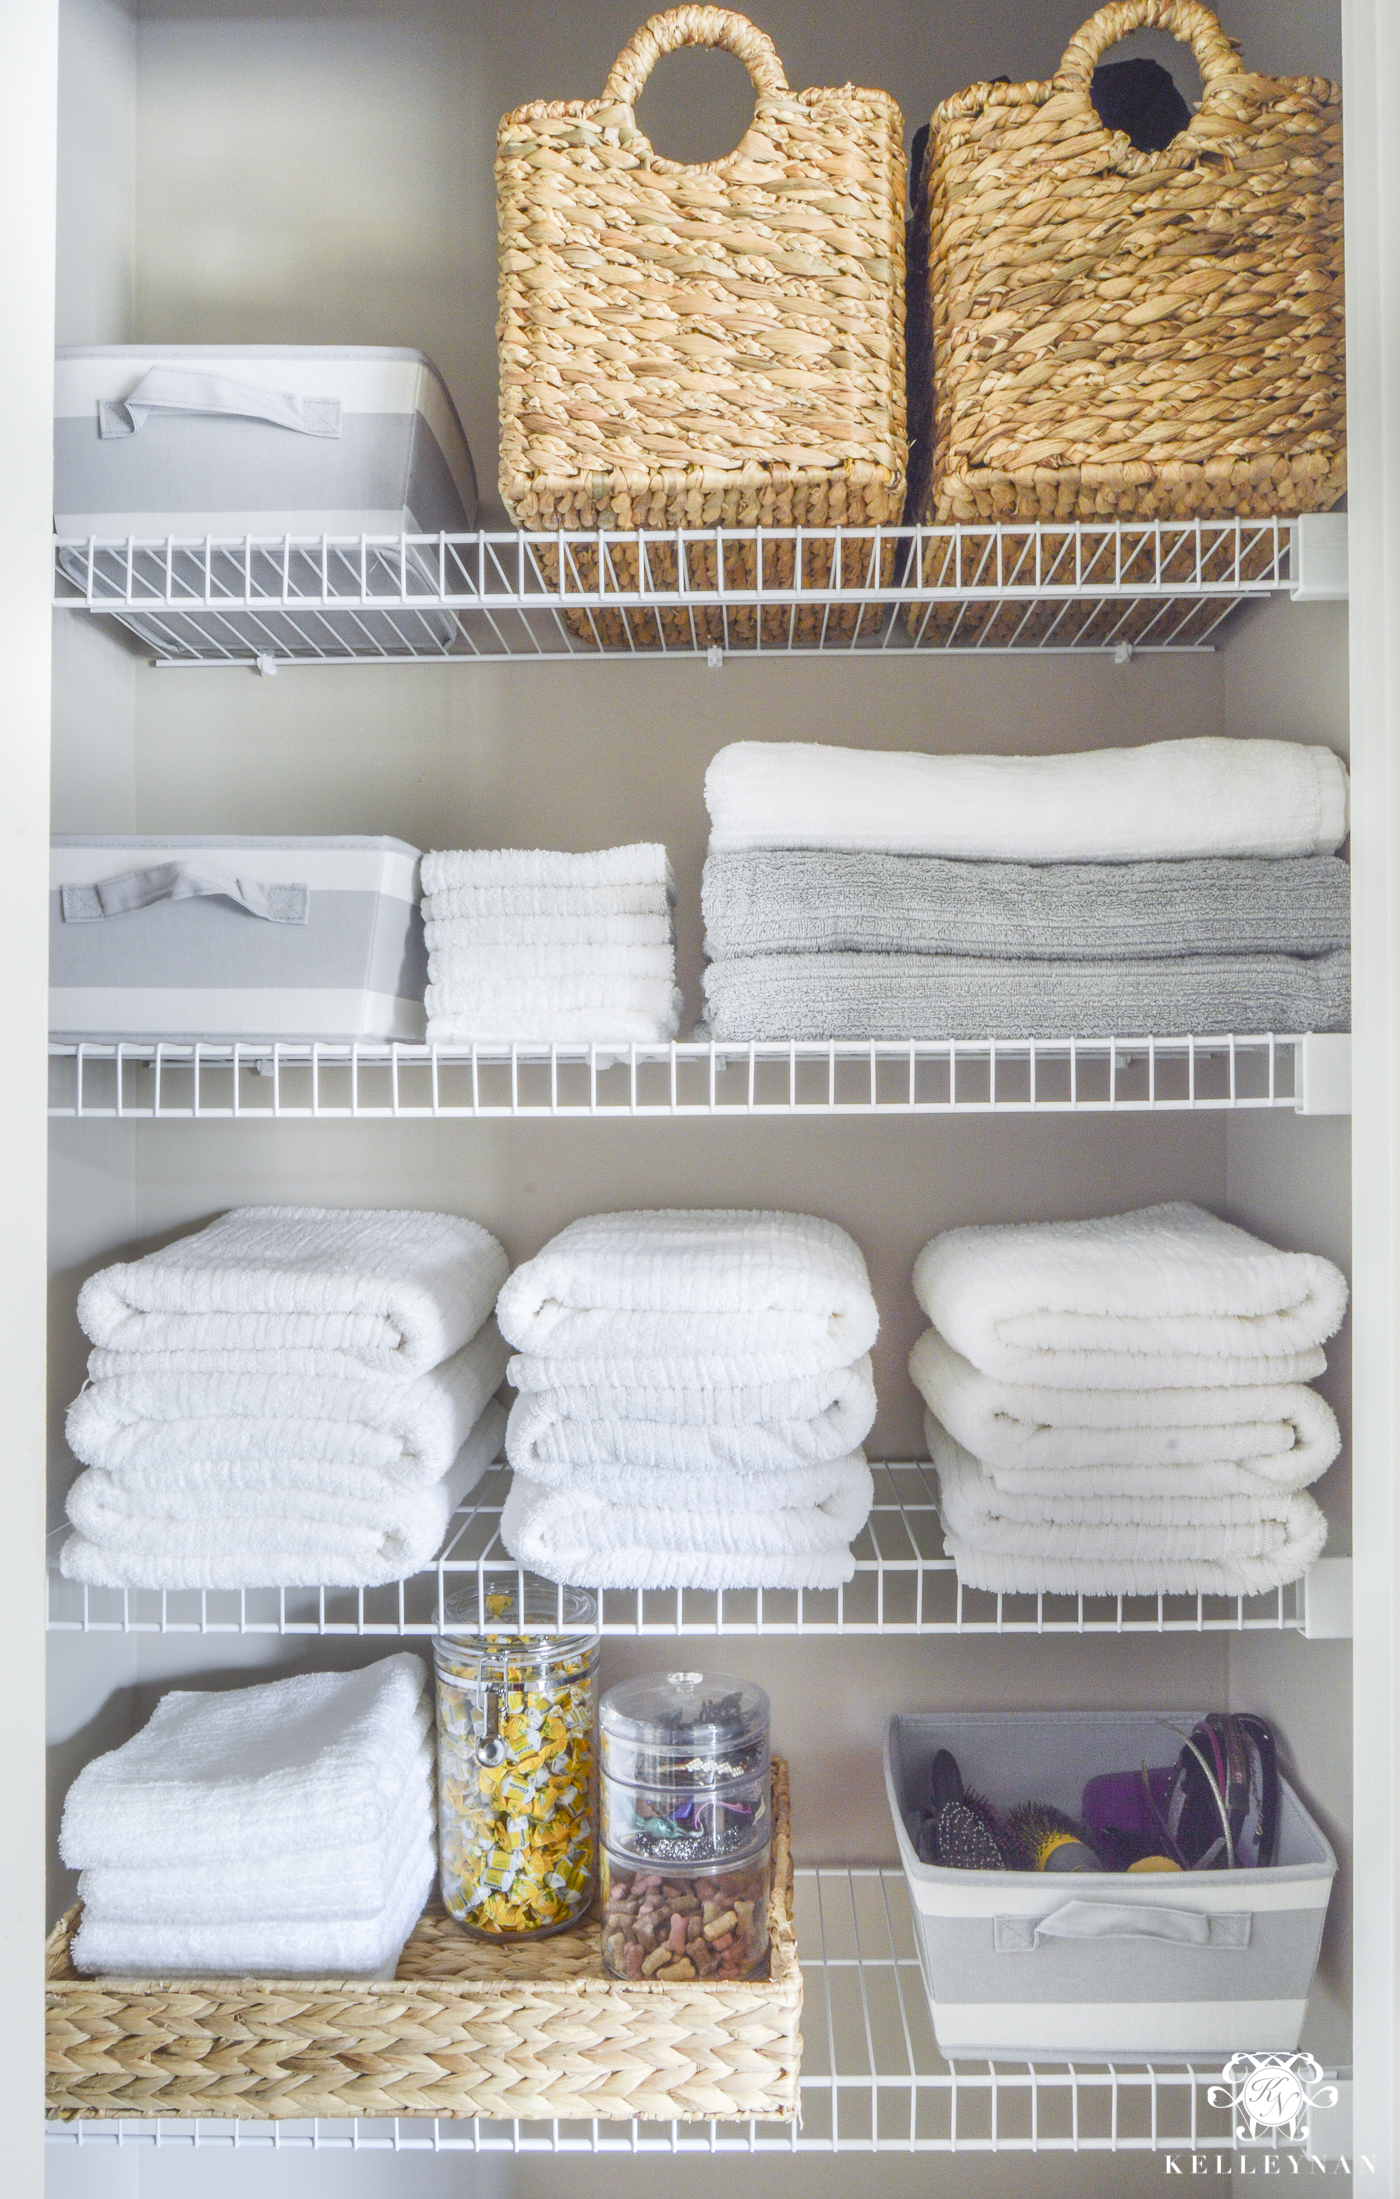 https://kelleynan.com/wp-content/uploads/2017/01/Organized-Bathroom-Linen-Closet-with-Towels-and-Baskets-3-of-14.jpg